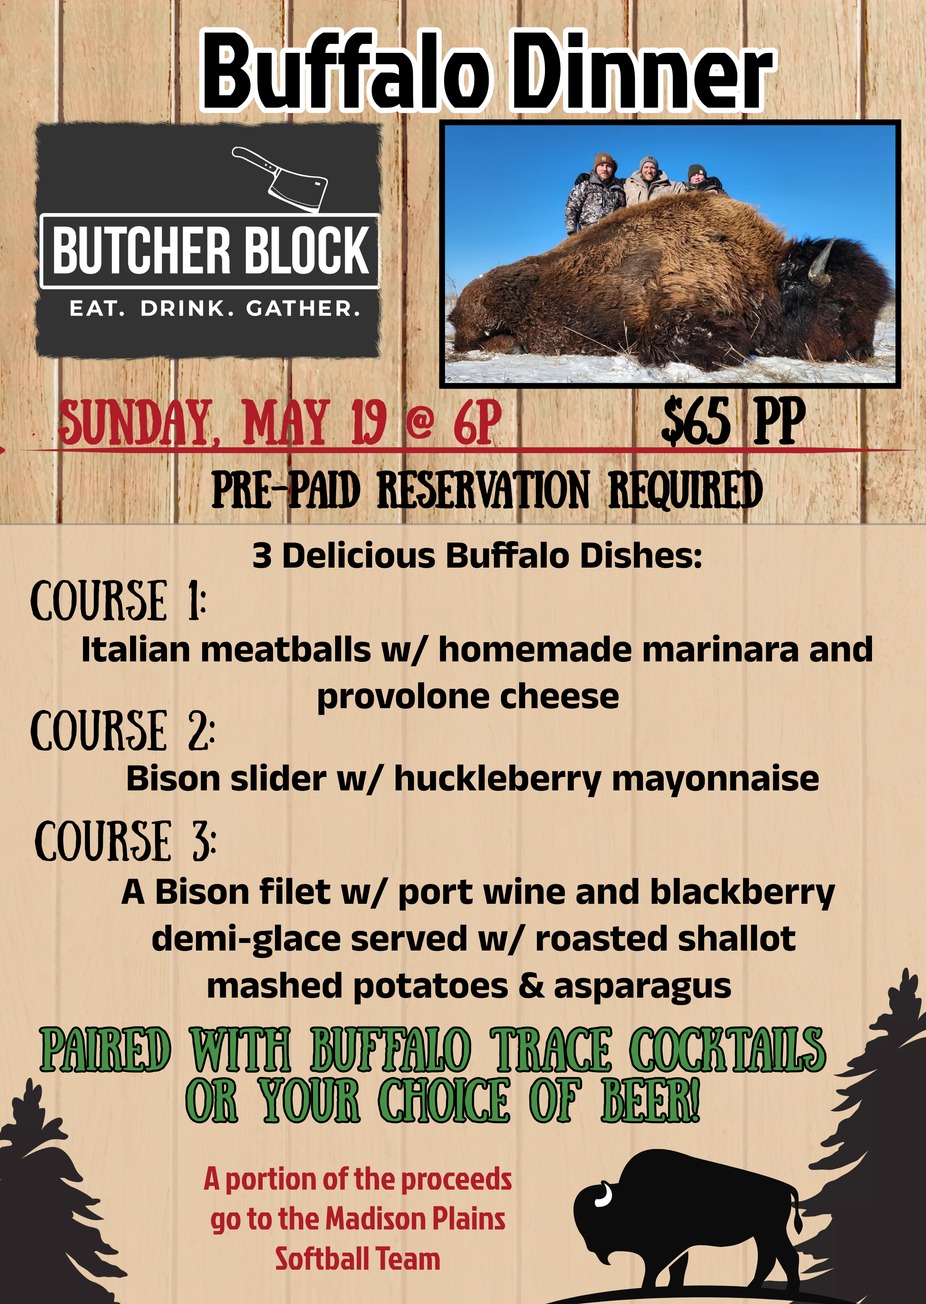 Buffalo Dinner event photo